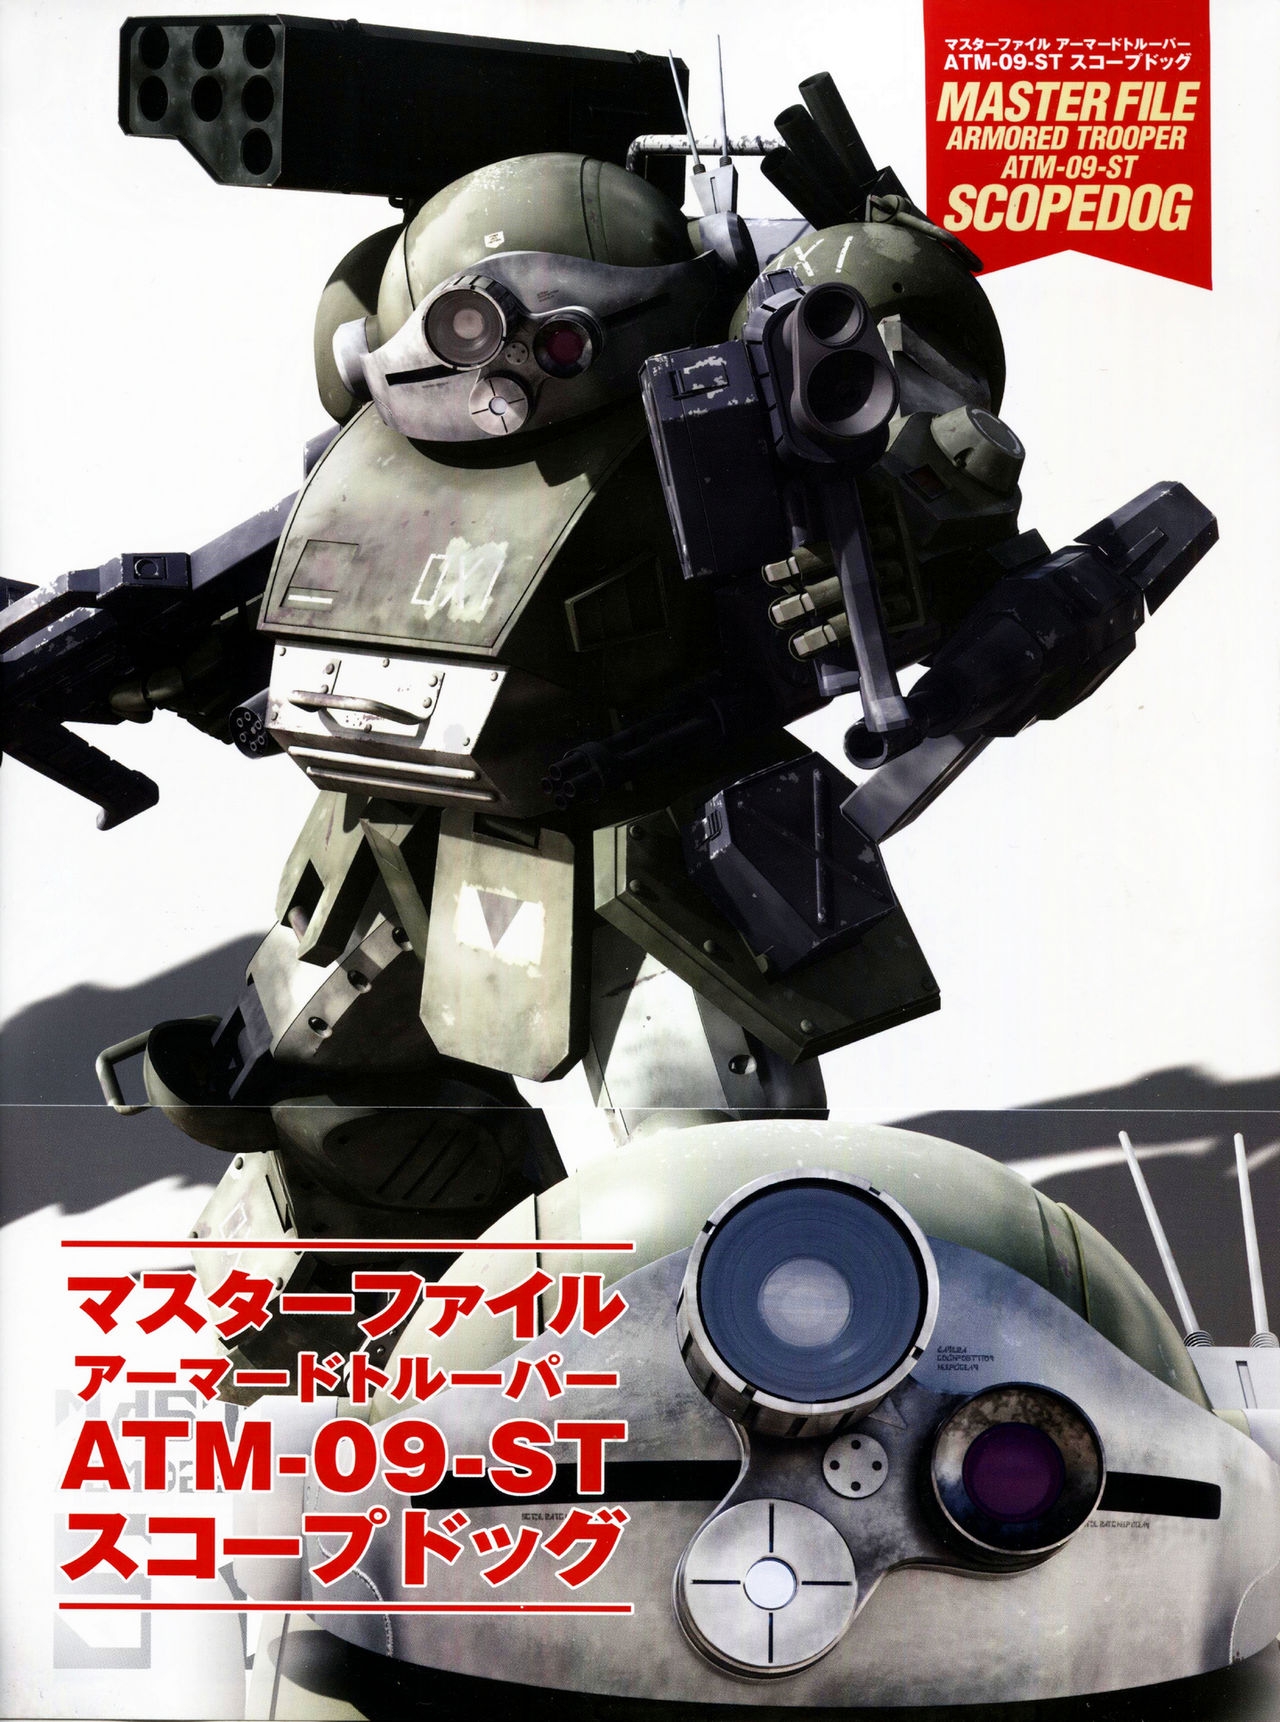 Master File - Armored Trooper AMT-09-ST Scopedog 2